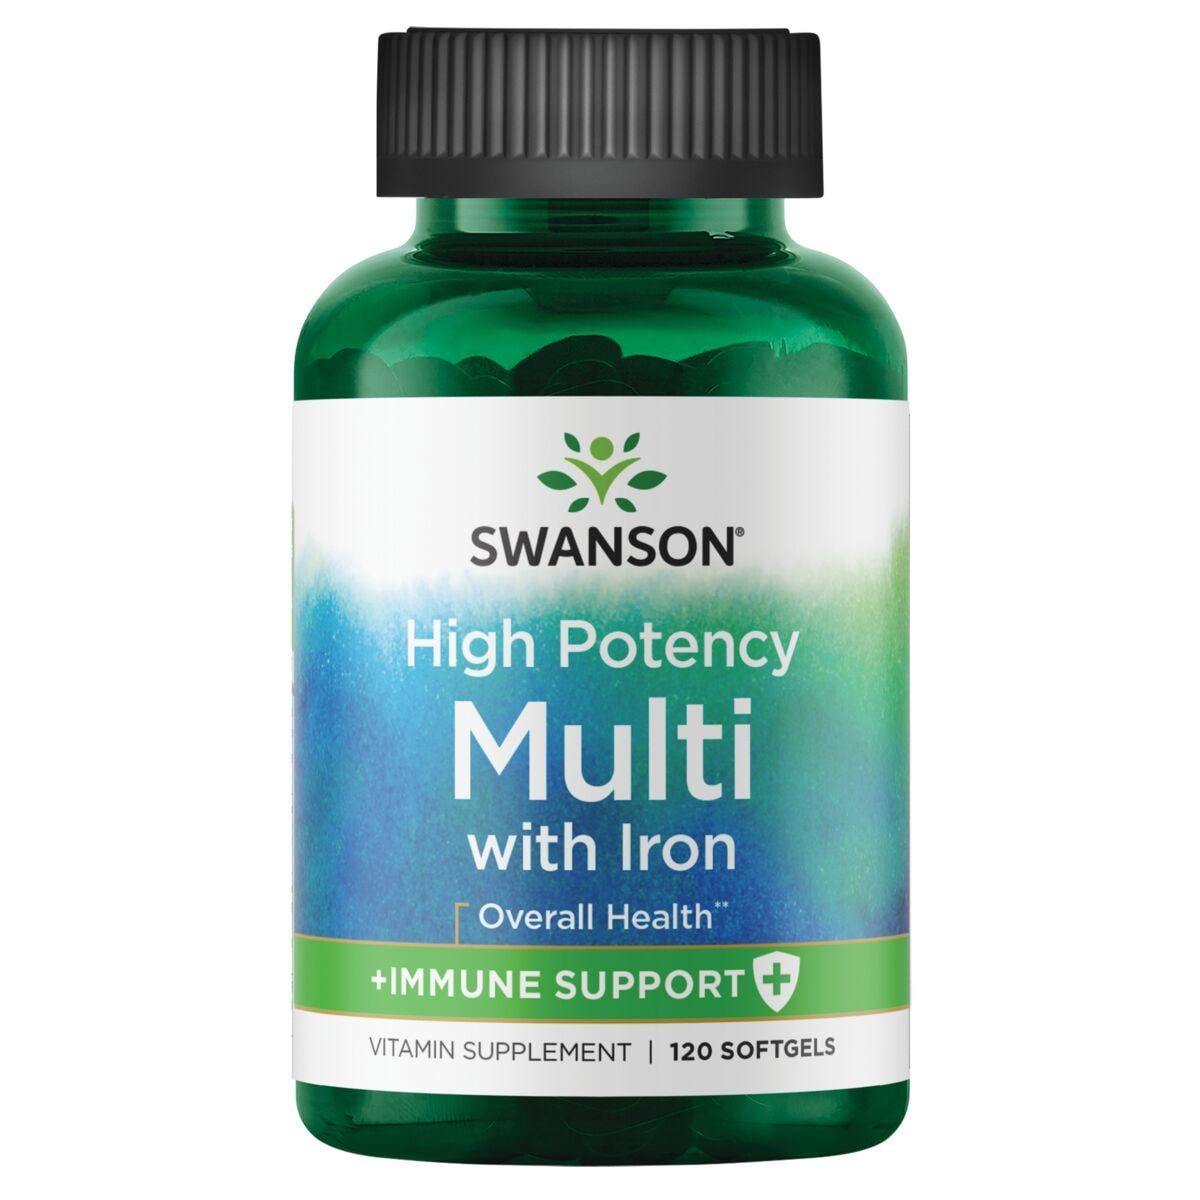 Swanson Premium High Potency Multi plus Immune Support - With Iron Vitamin 120 Soft Gels